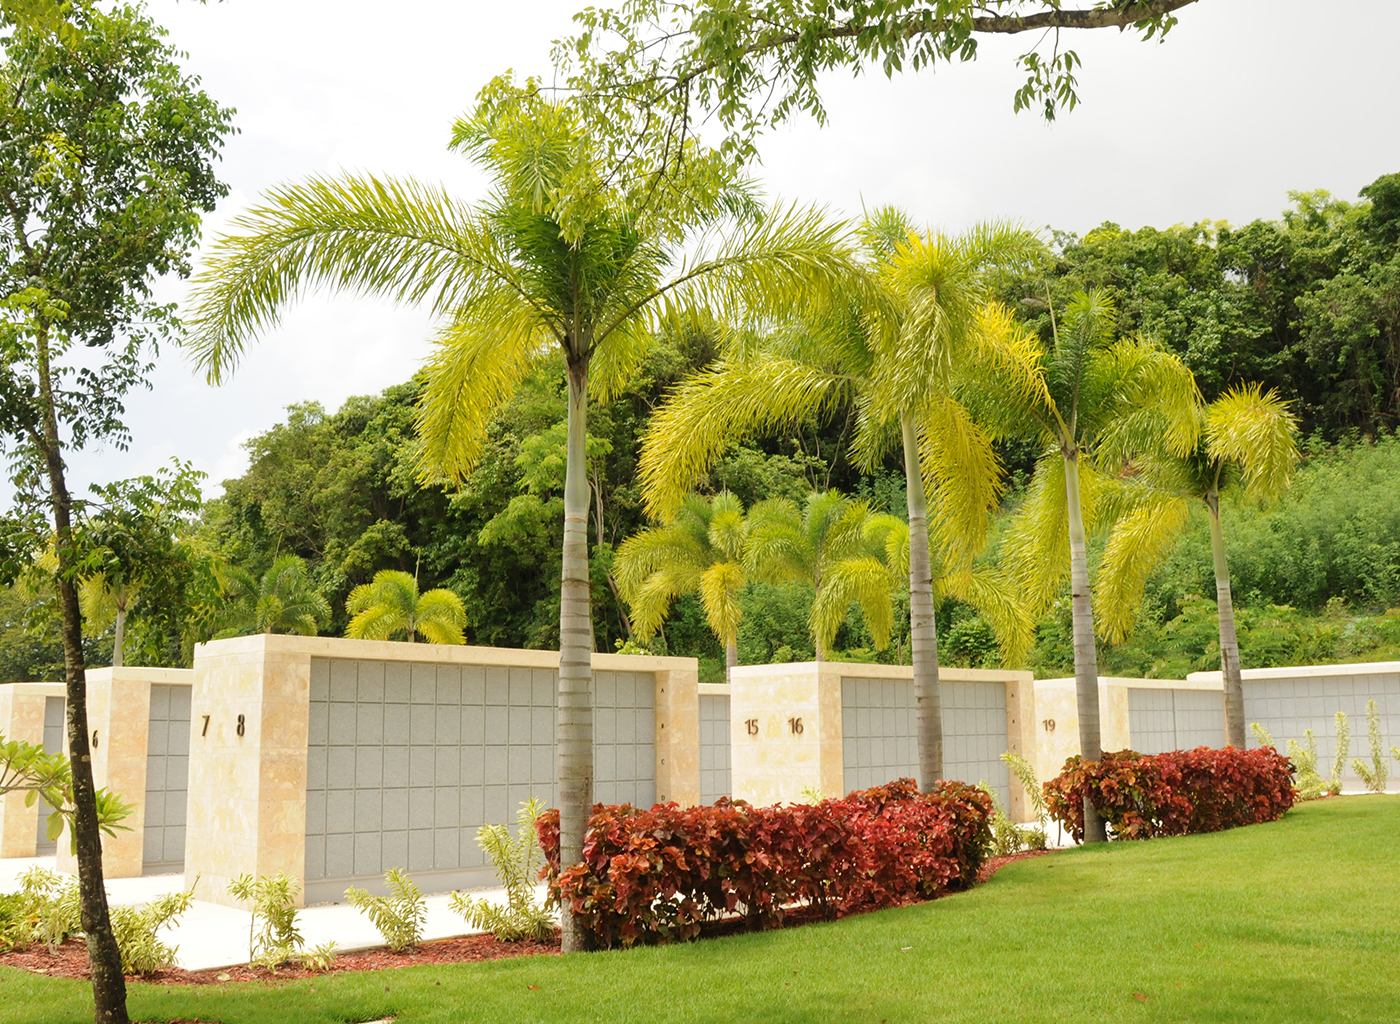 Puerto Rico National Cemetery